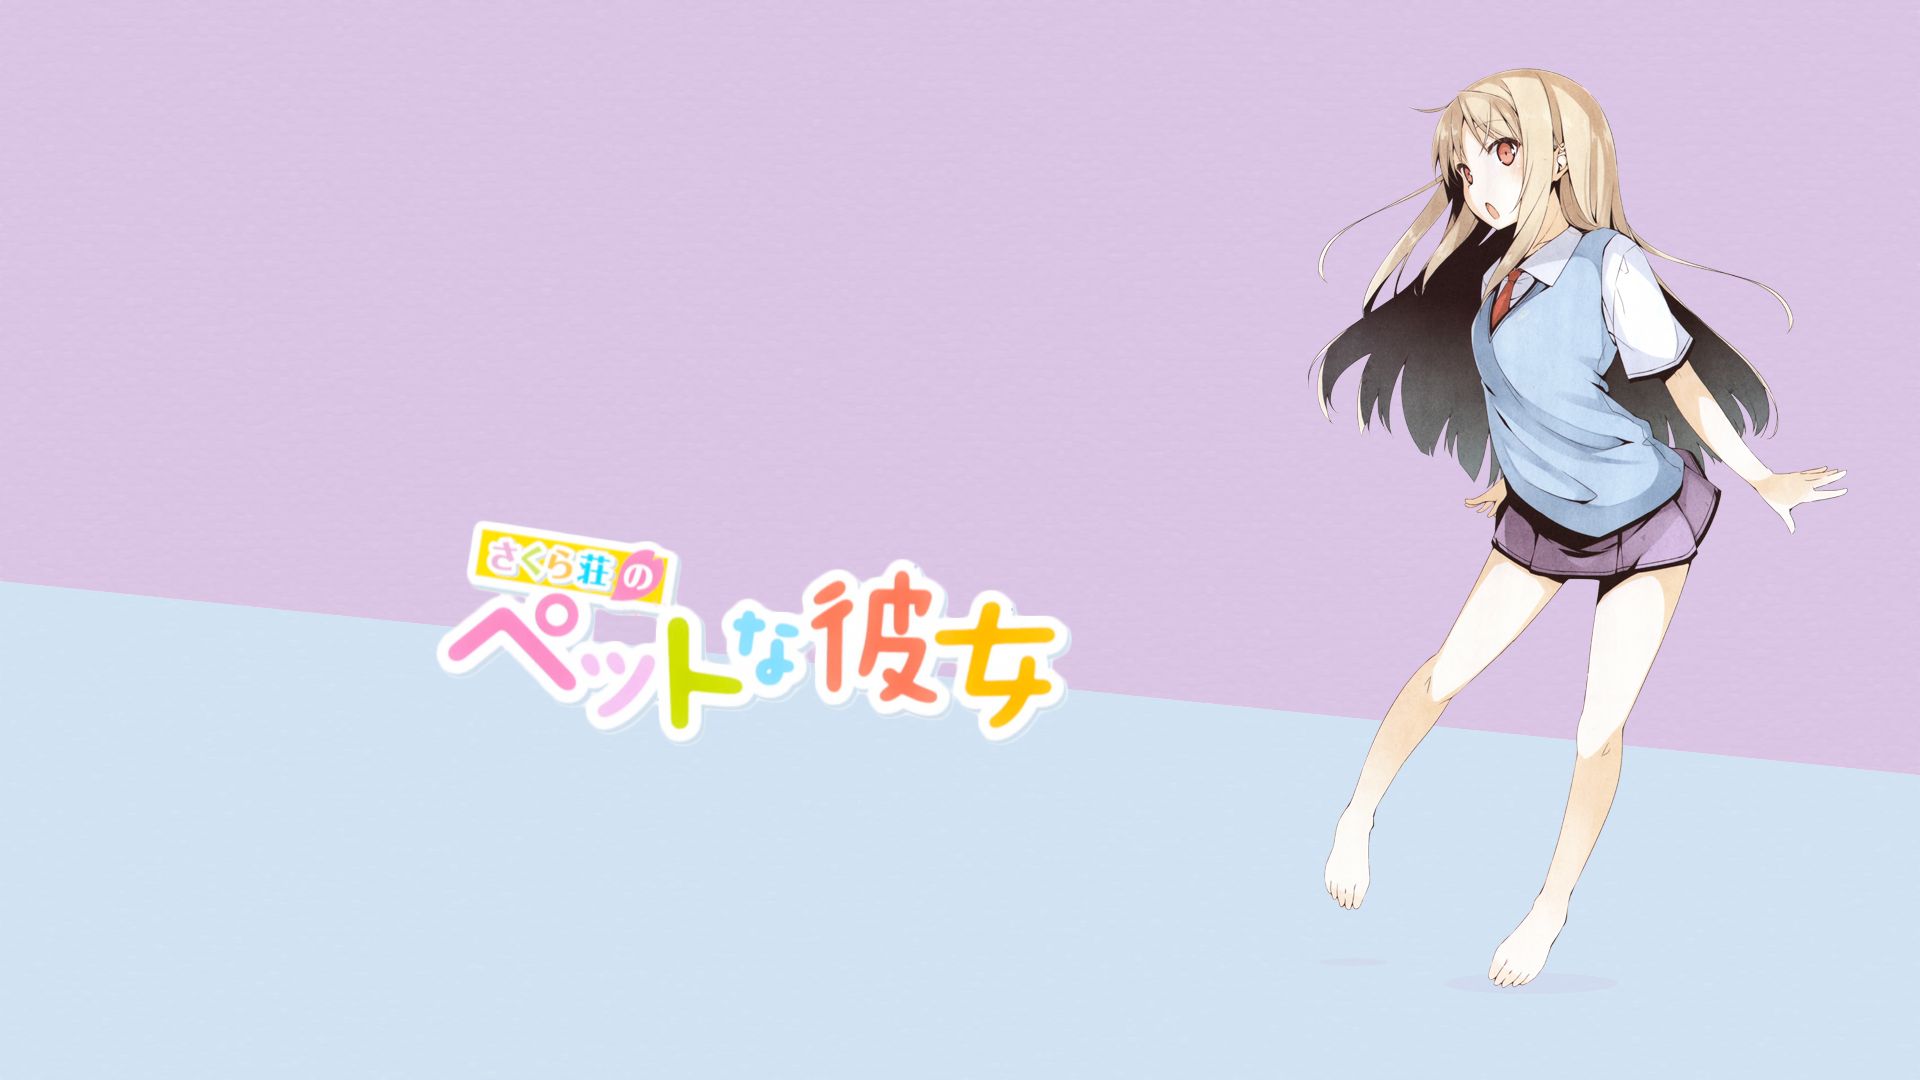 Laden Sie das Animes, Mashiro Shiina, Sakurasou No Pet Na Kanojo-Bild kostenlos auf Ihren PC-Desktop herunter